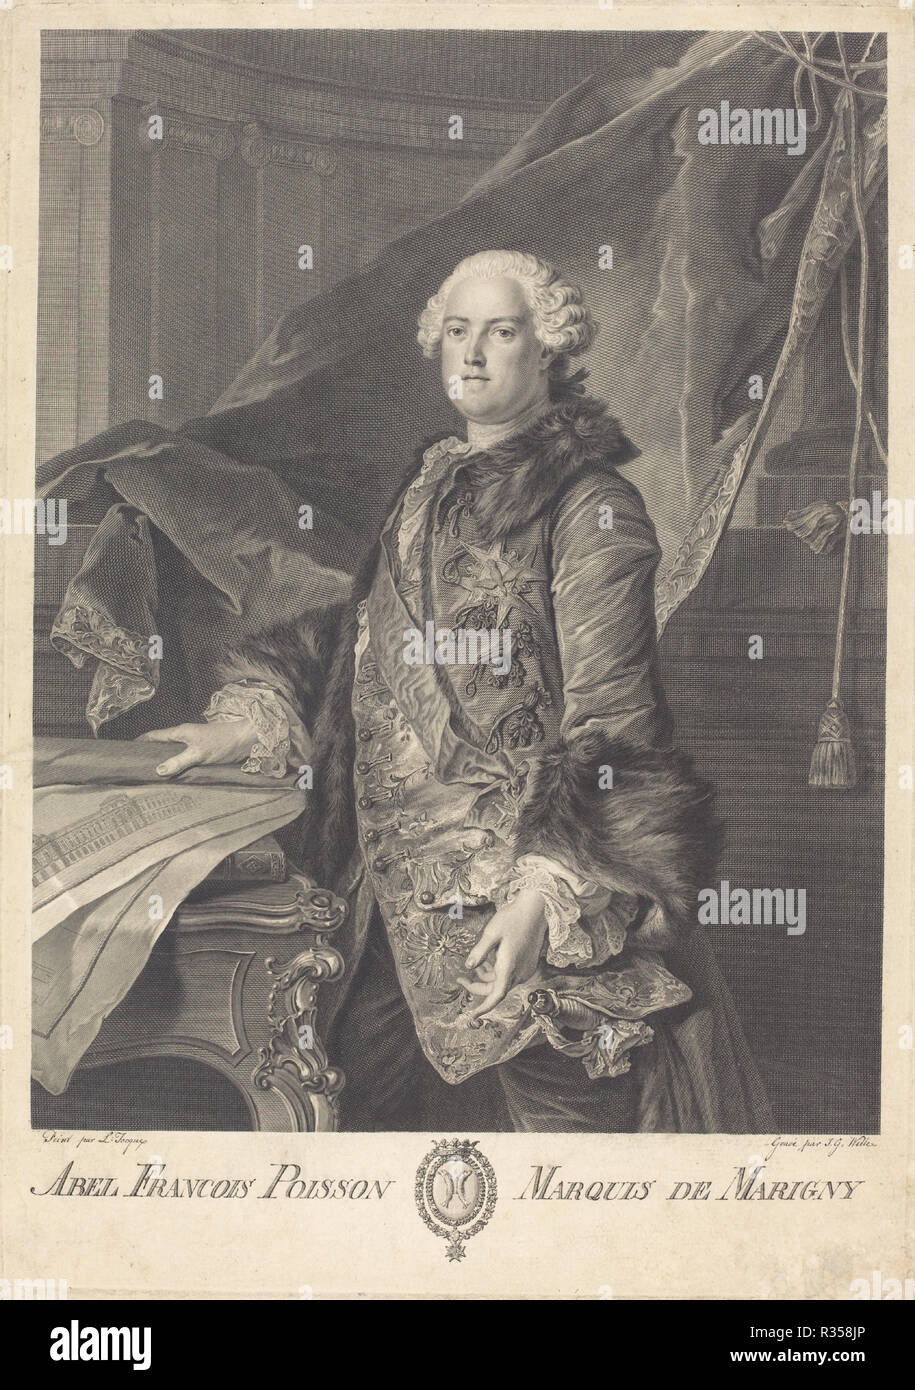 Abel Francois Poisson, Marquis de Marigny. Medium: engraving. Museum: National Gallery of Art, Washington DC. Author: Johann Georg Wille after Louis Tocqué. Stock Photo